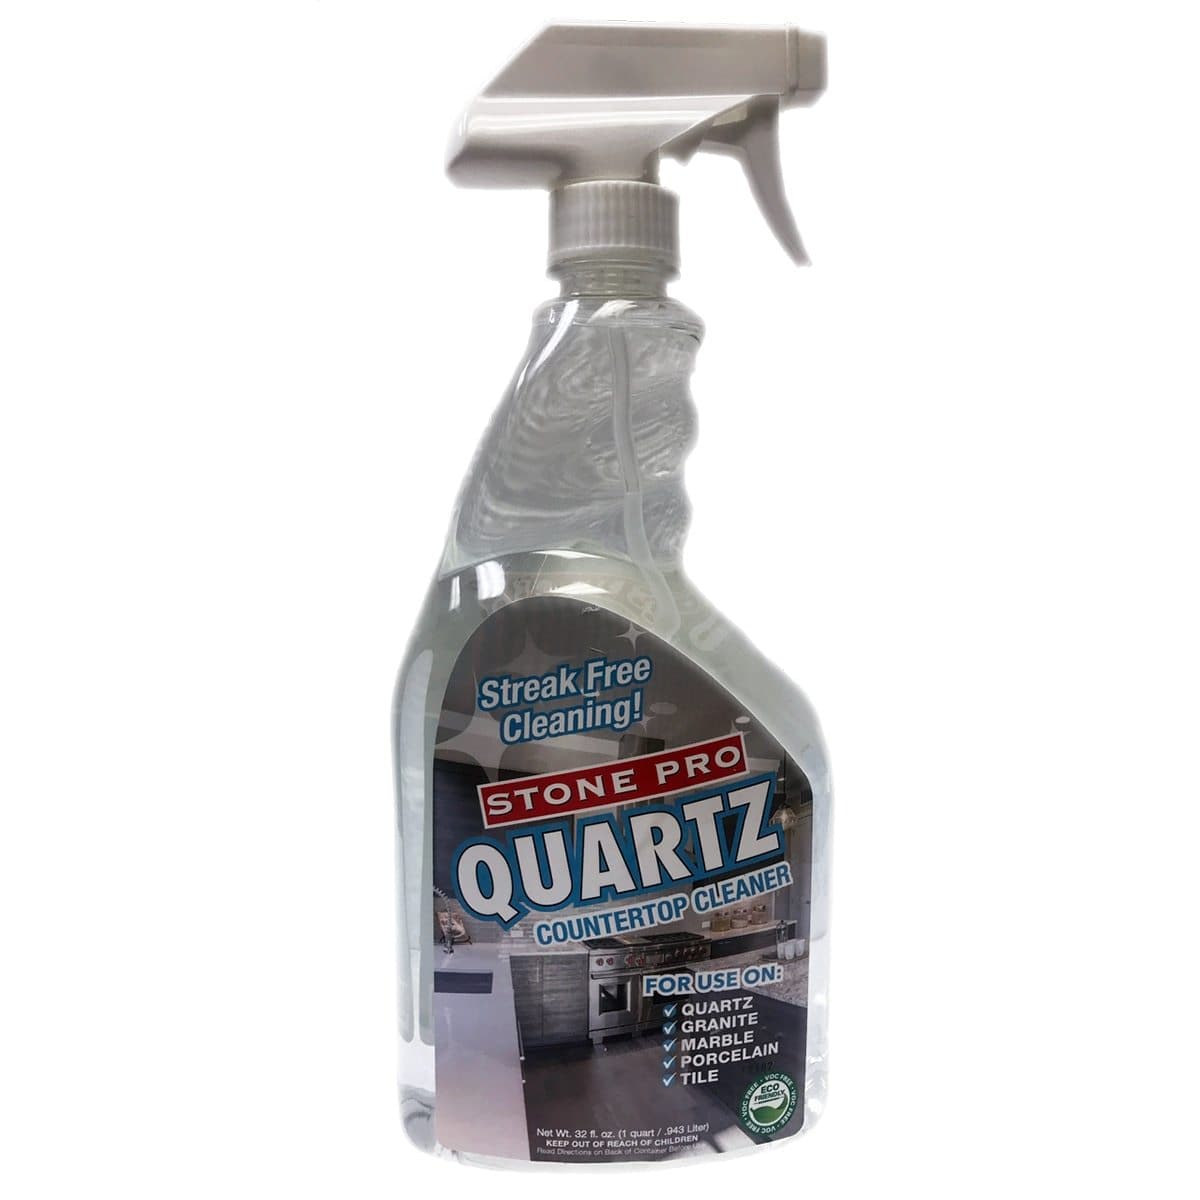 Quartz NanoGuard™ Protection Kit – Pro Cleaning Products Inc.